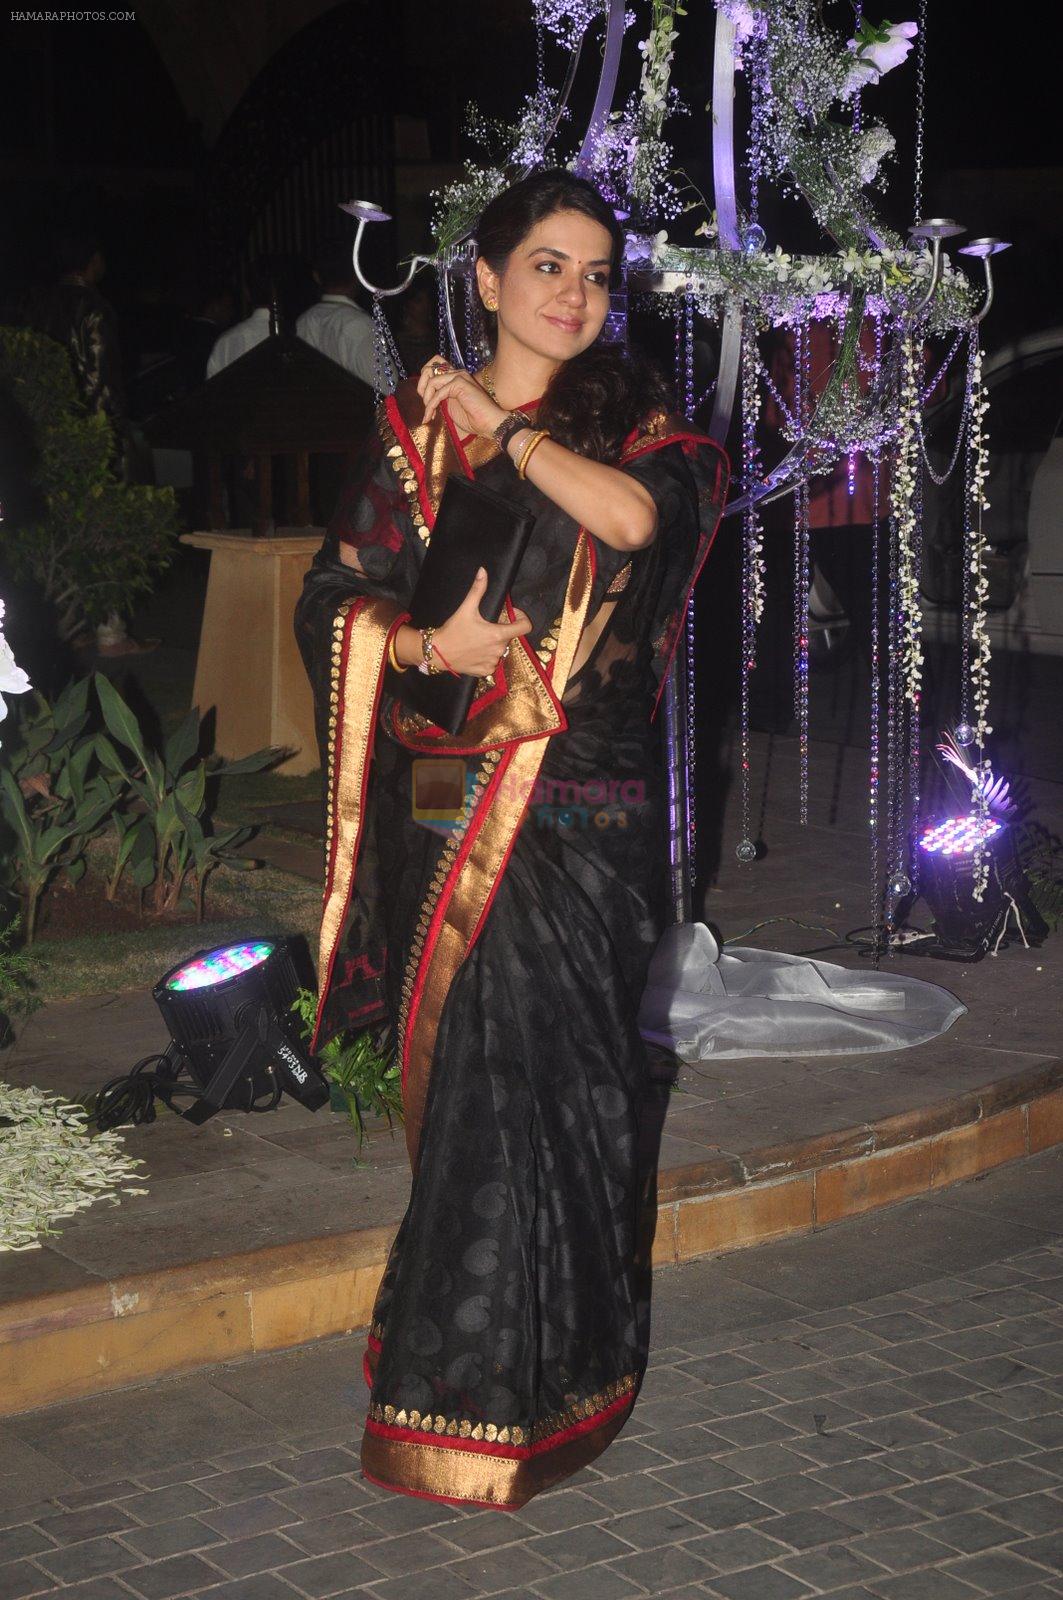 Shaina NC at Sangeet ceremony of Riddhi Malhotra and Tejas Talwalkar in J W Marriott, Mumbai on 13th Dec 2014